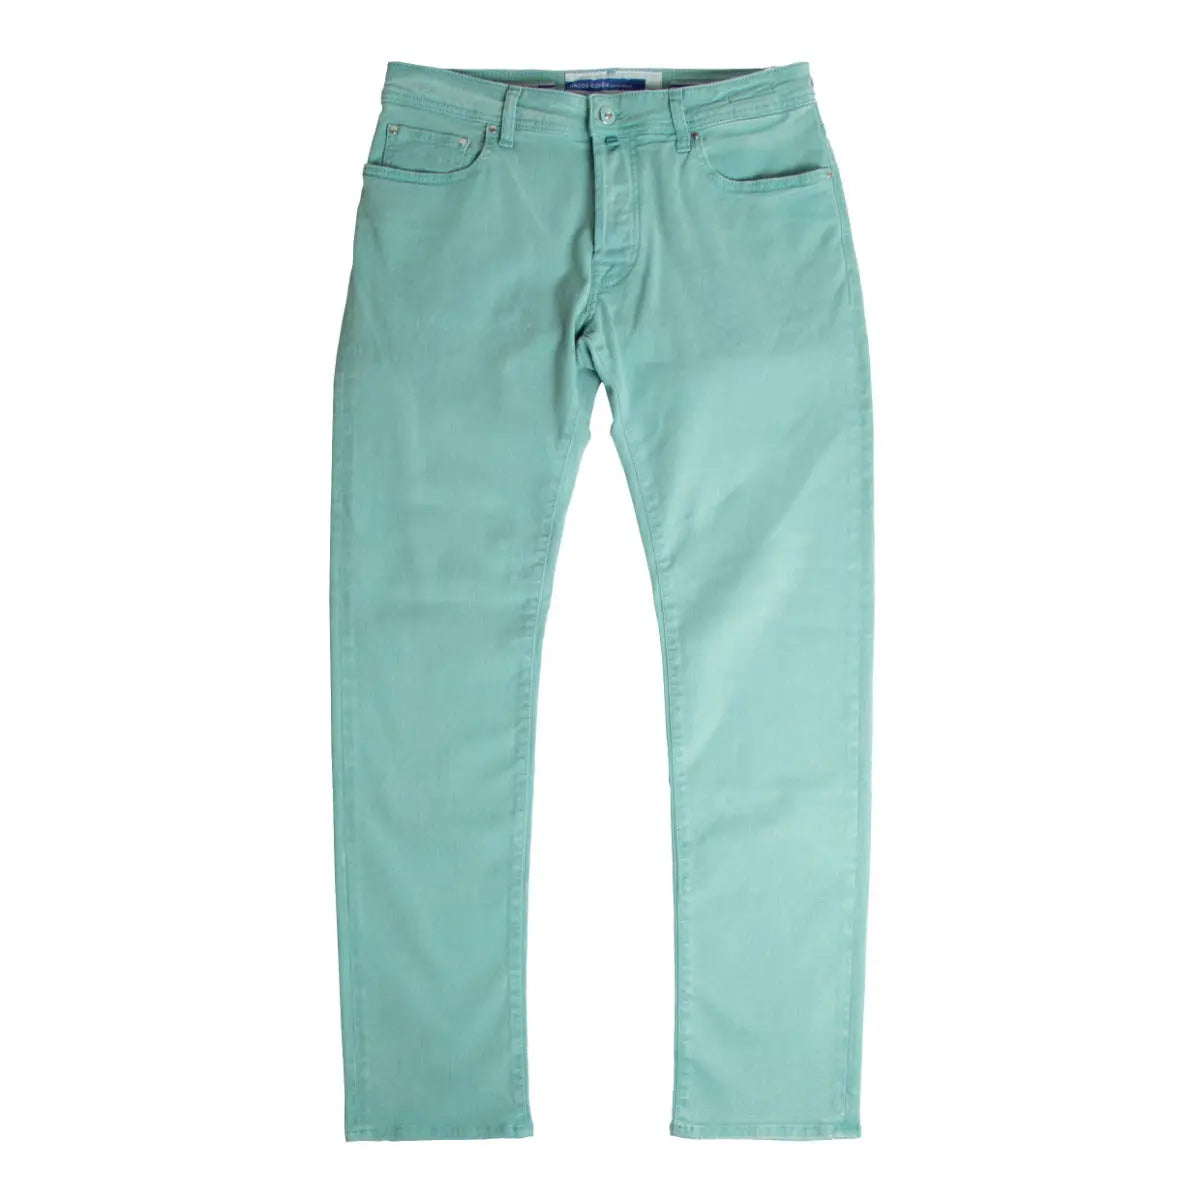 Sea Green ‘Bard’ Slim Fit Stretch Jeans  Jacob Cohen   